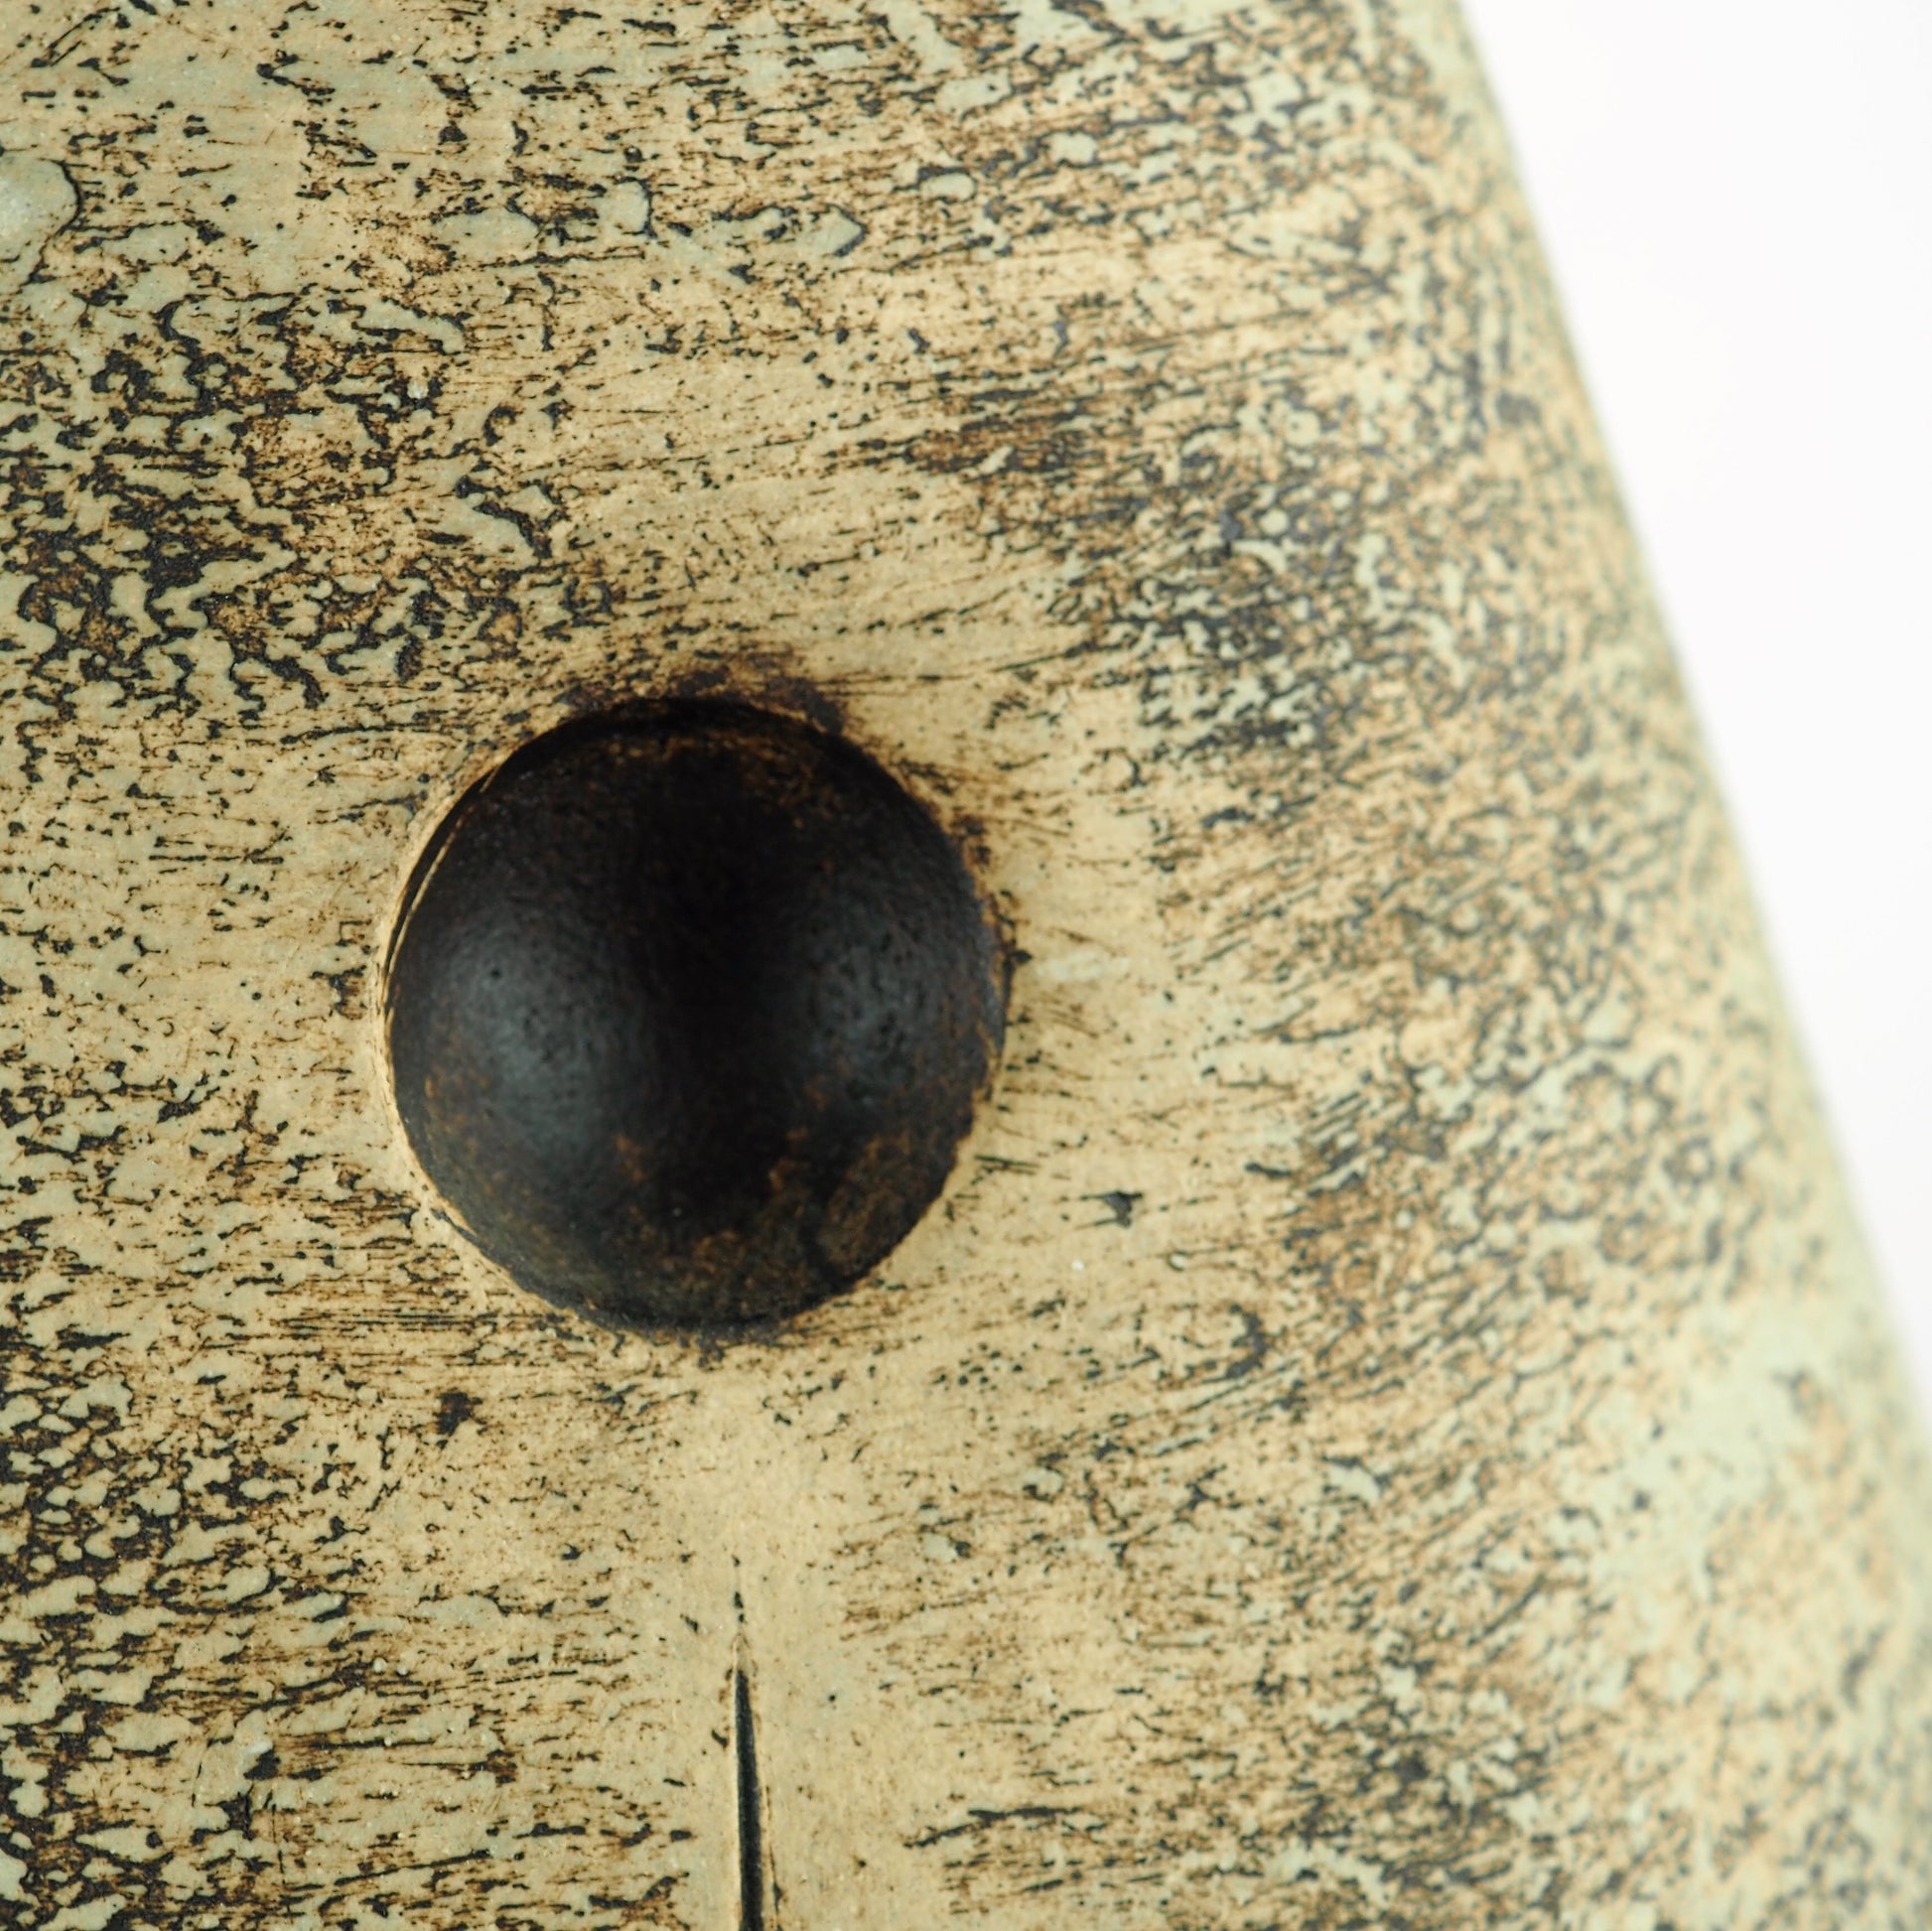 Capener, Richard – Large Stoneware Vessel | Richard Capener | Primavera Gallery